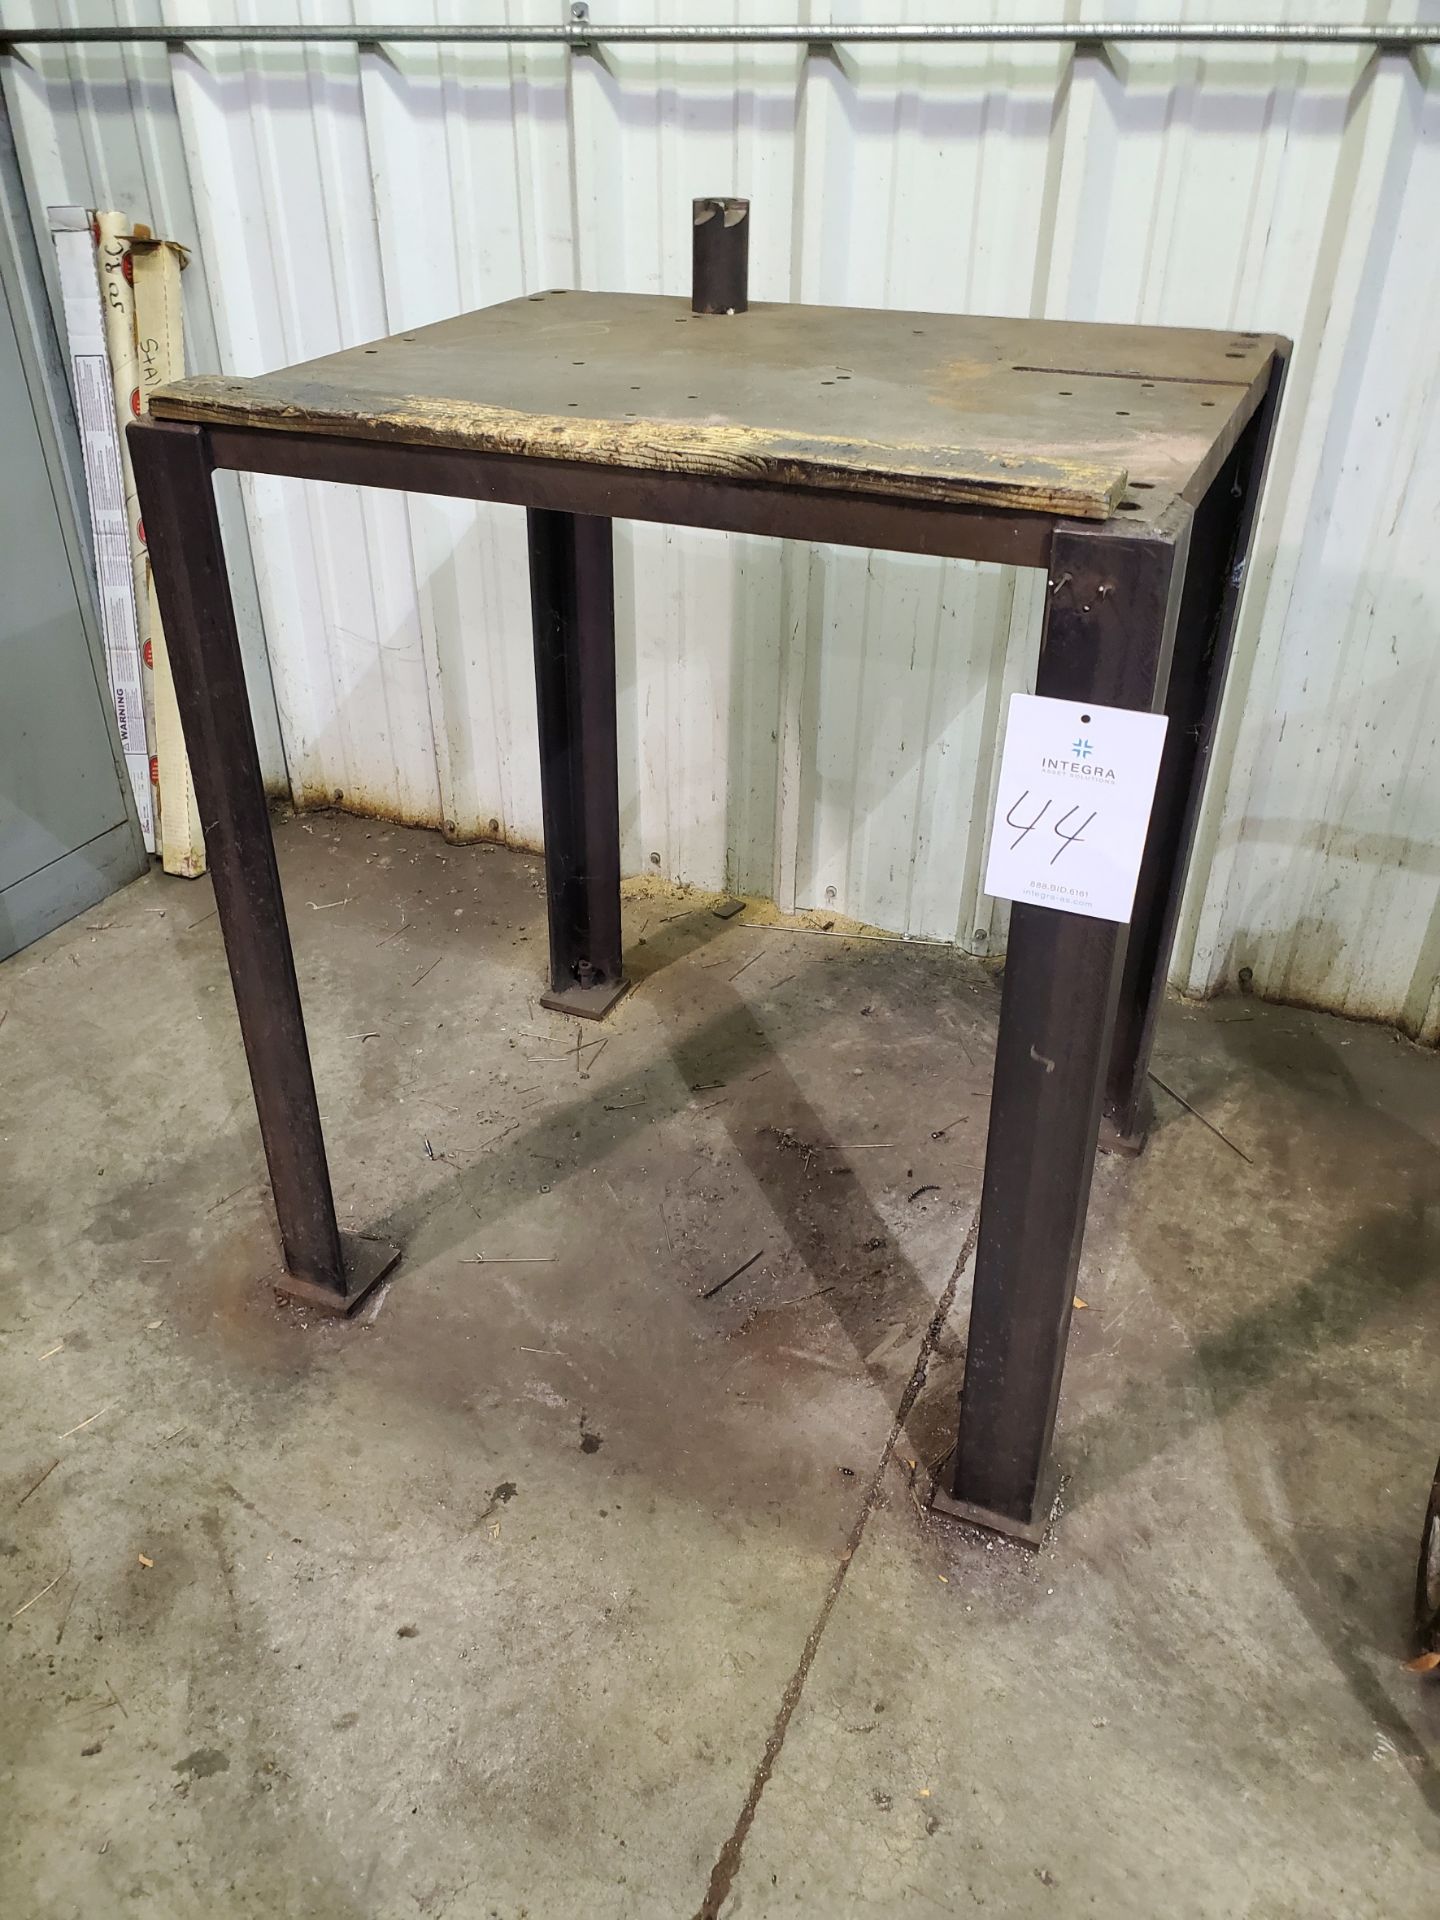 30" x 32" x 36" High Steel Welding Table